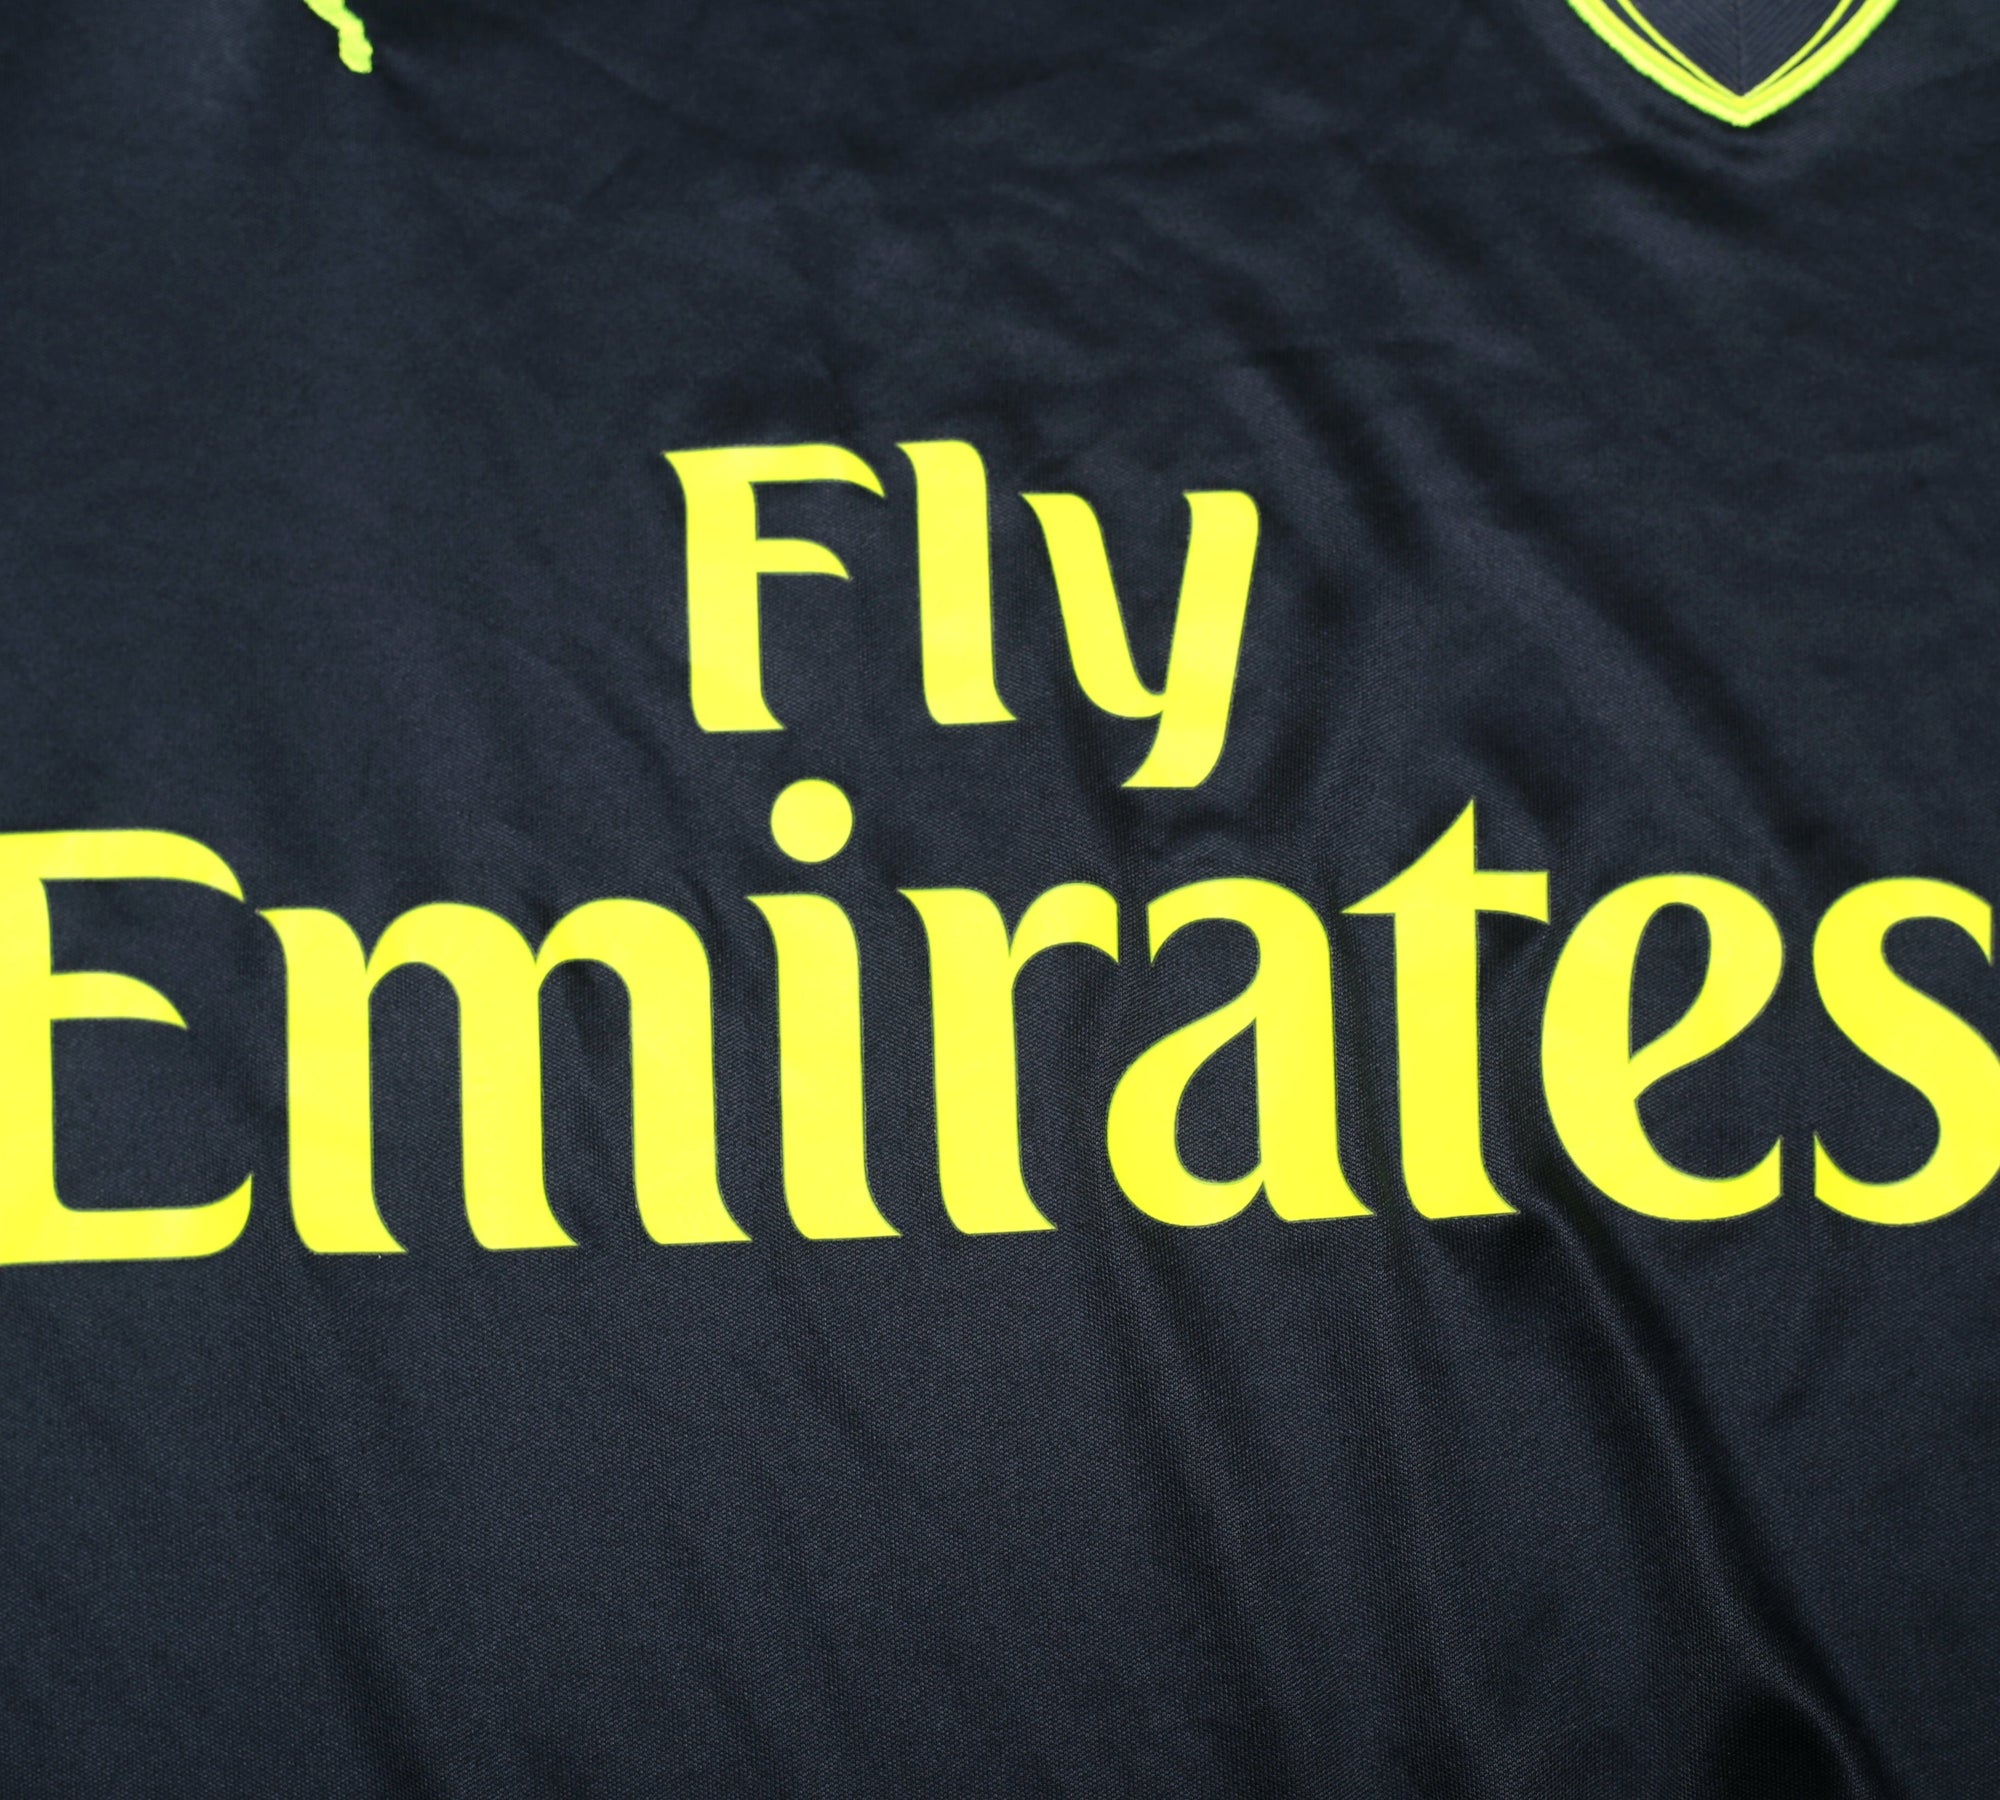 2016/17 WILSHERE #10 Arsenal Vintage Puma Third Football Shirt (L)